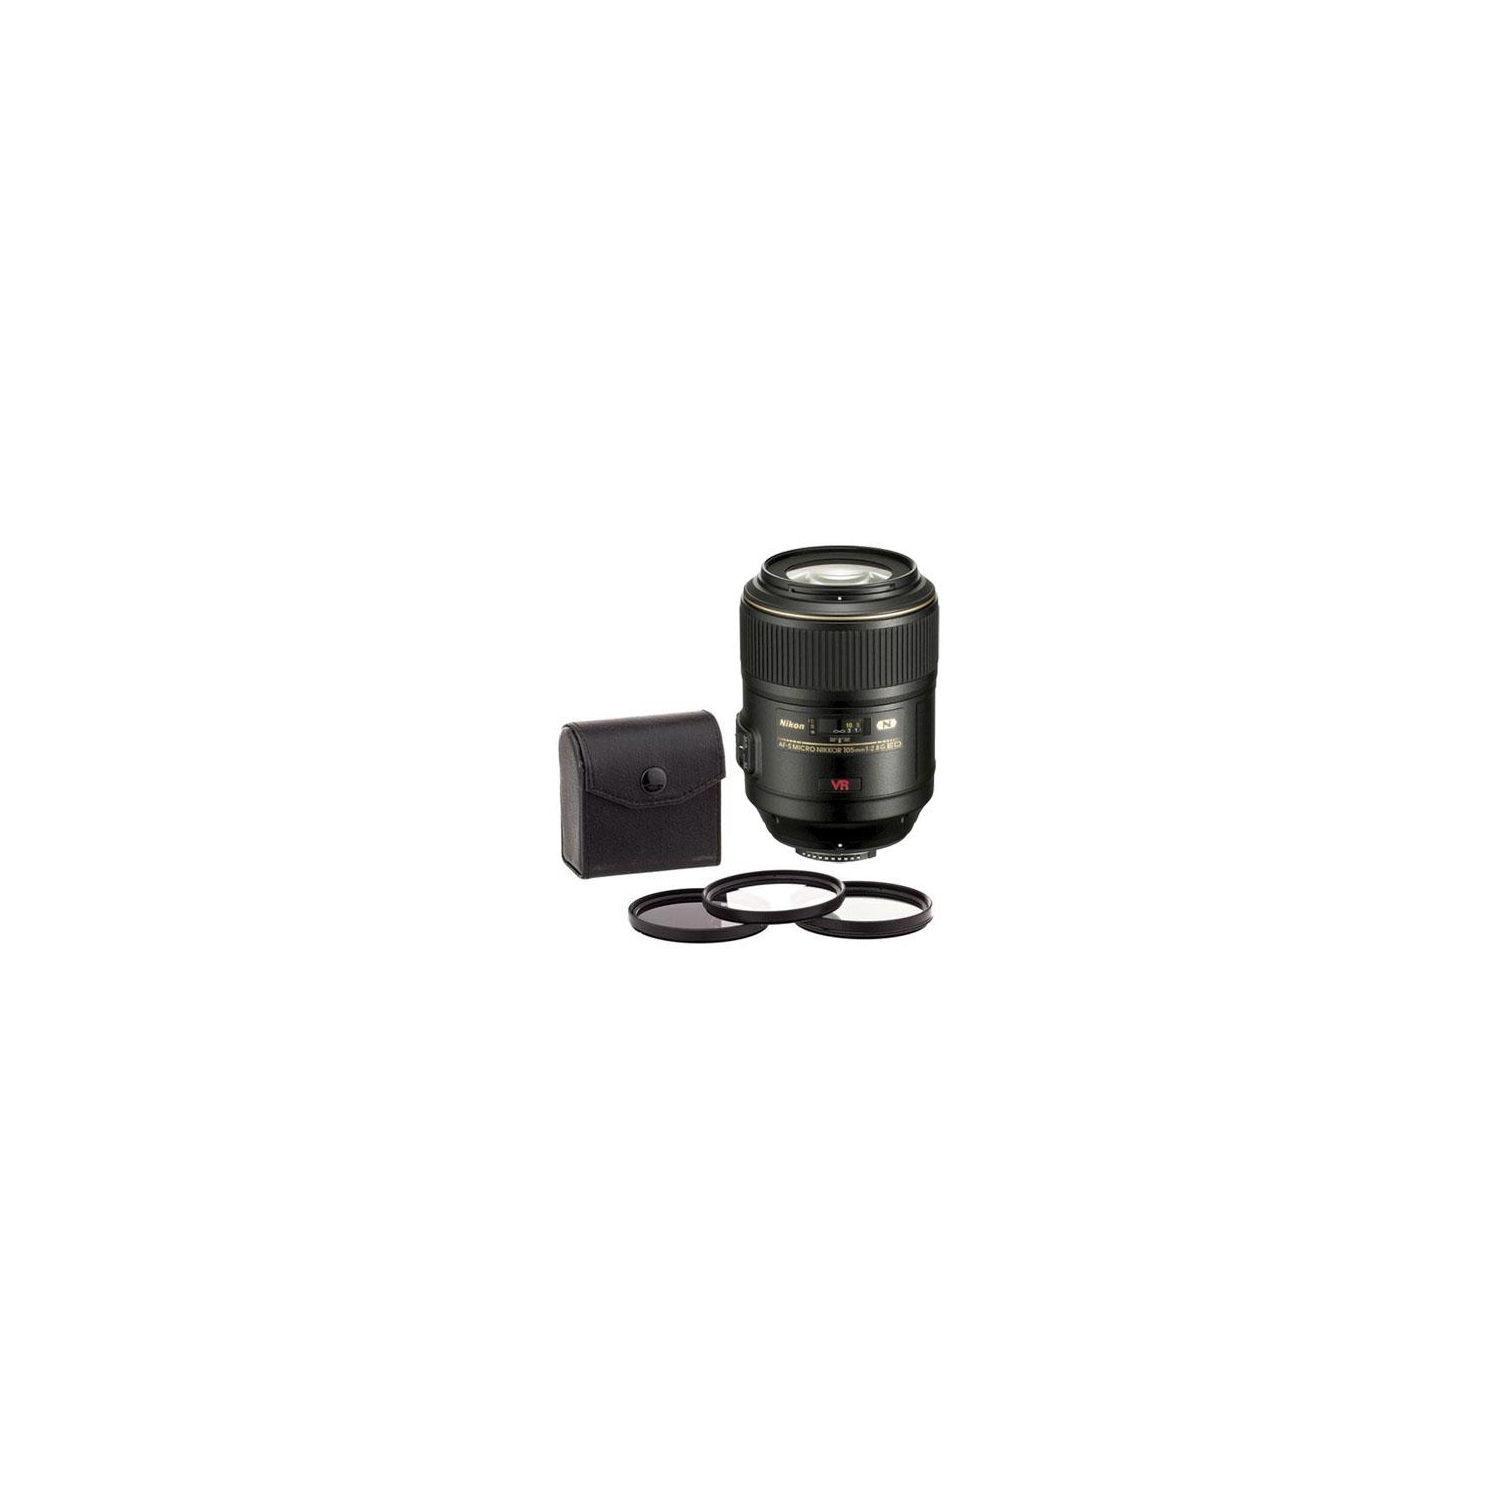 Nikon 105mm f/2.8G ED-IF AF-S VR Micro NIKKOR Lens W 3pc Filter kit - US Version w/ Seller Warranty